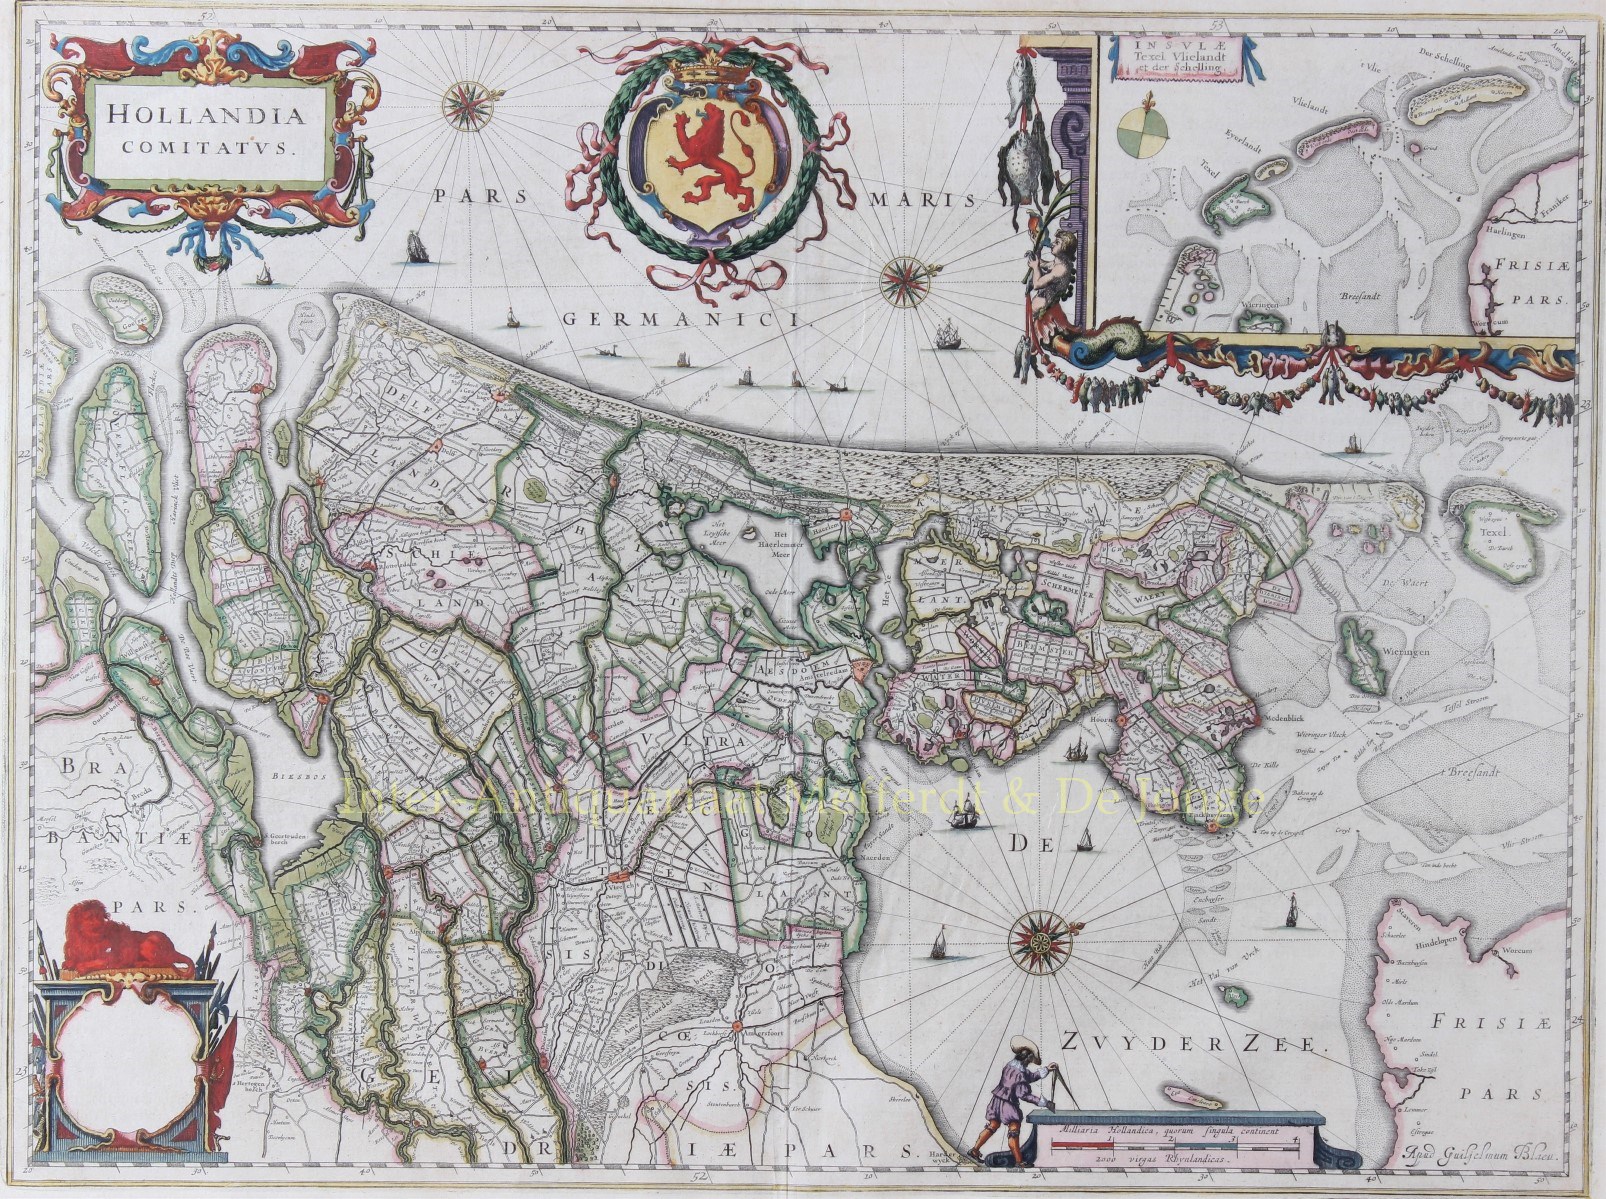 rare old map of Holland original antique engraving 17th century